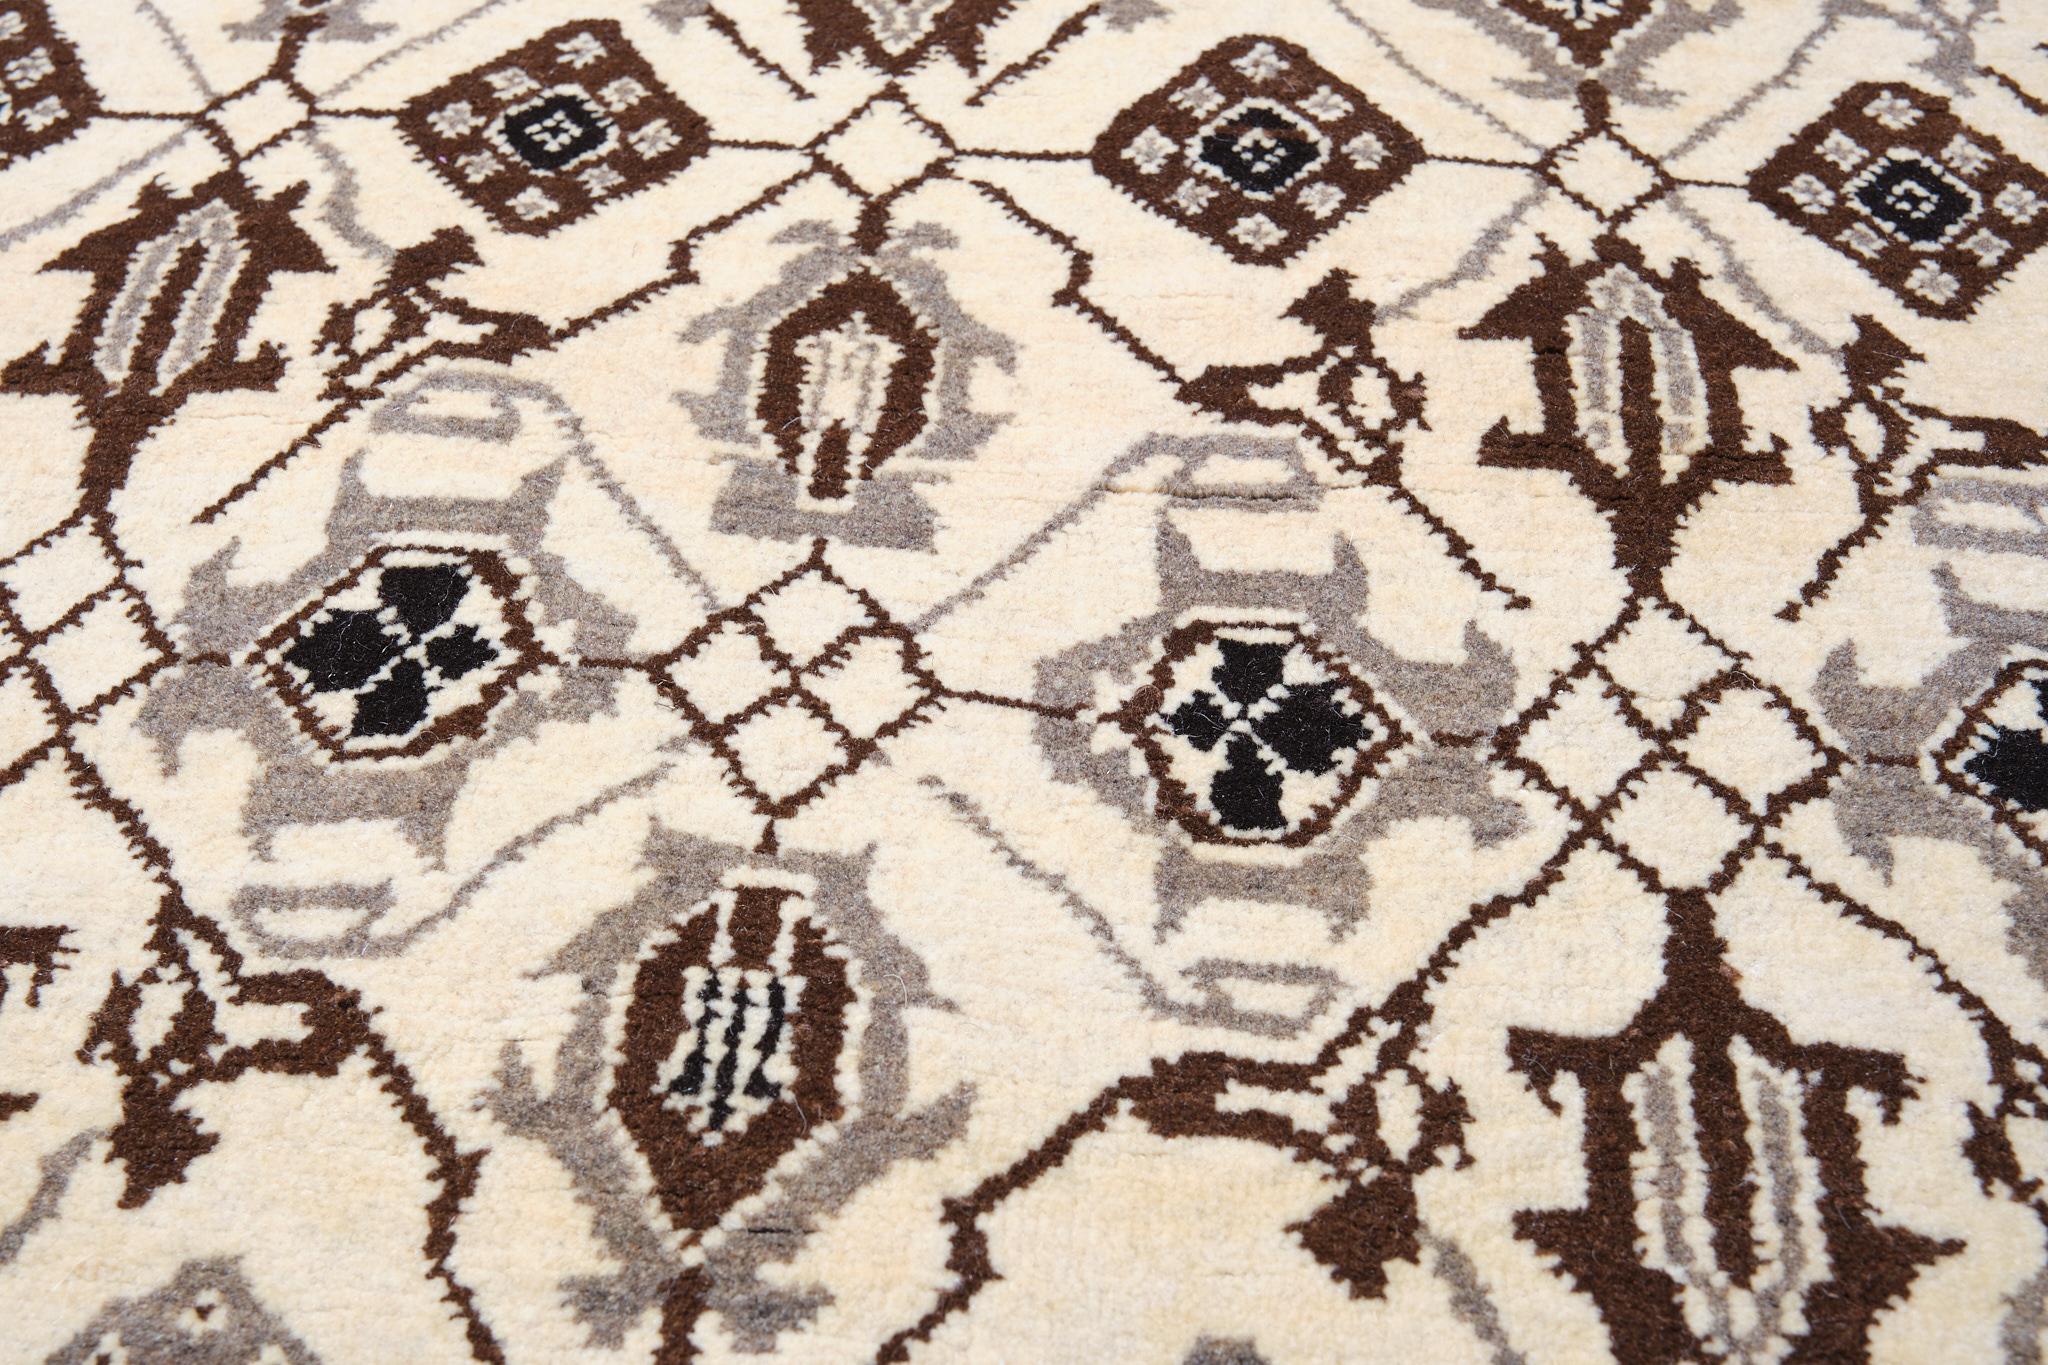 Turkish Ararat Rugs Mamluk Carpet with Lattice Design, Natural Sheep Wool Colors No Dye For Sale